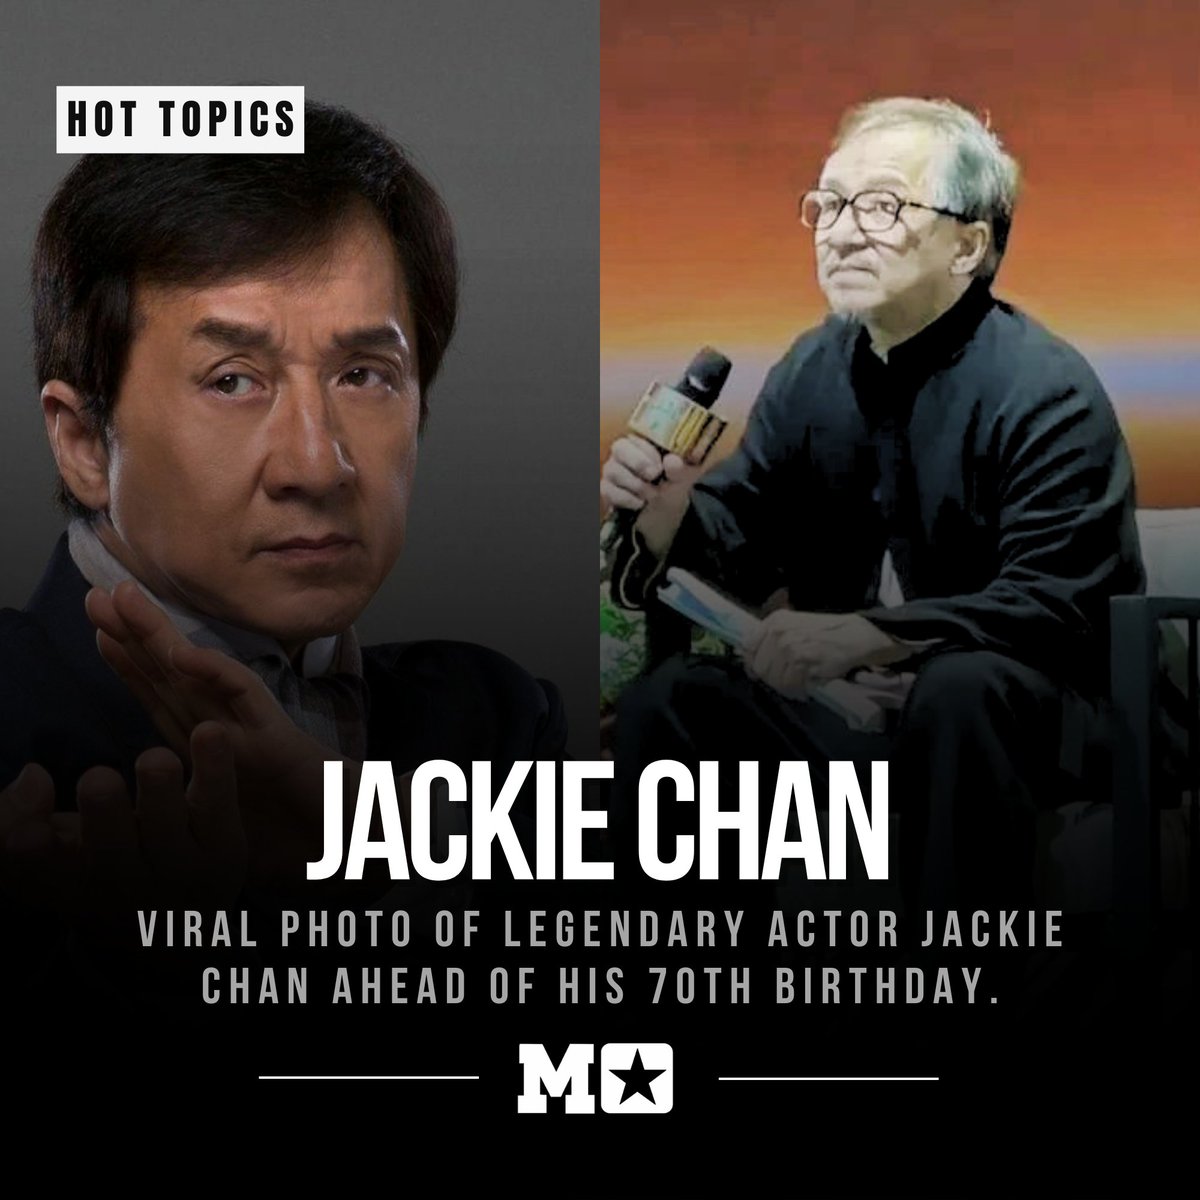 Viral photo of legendary actor Jackie Chan ahead of his 70th birthday❤️

#jackiechan #viralphotos